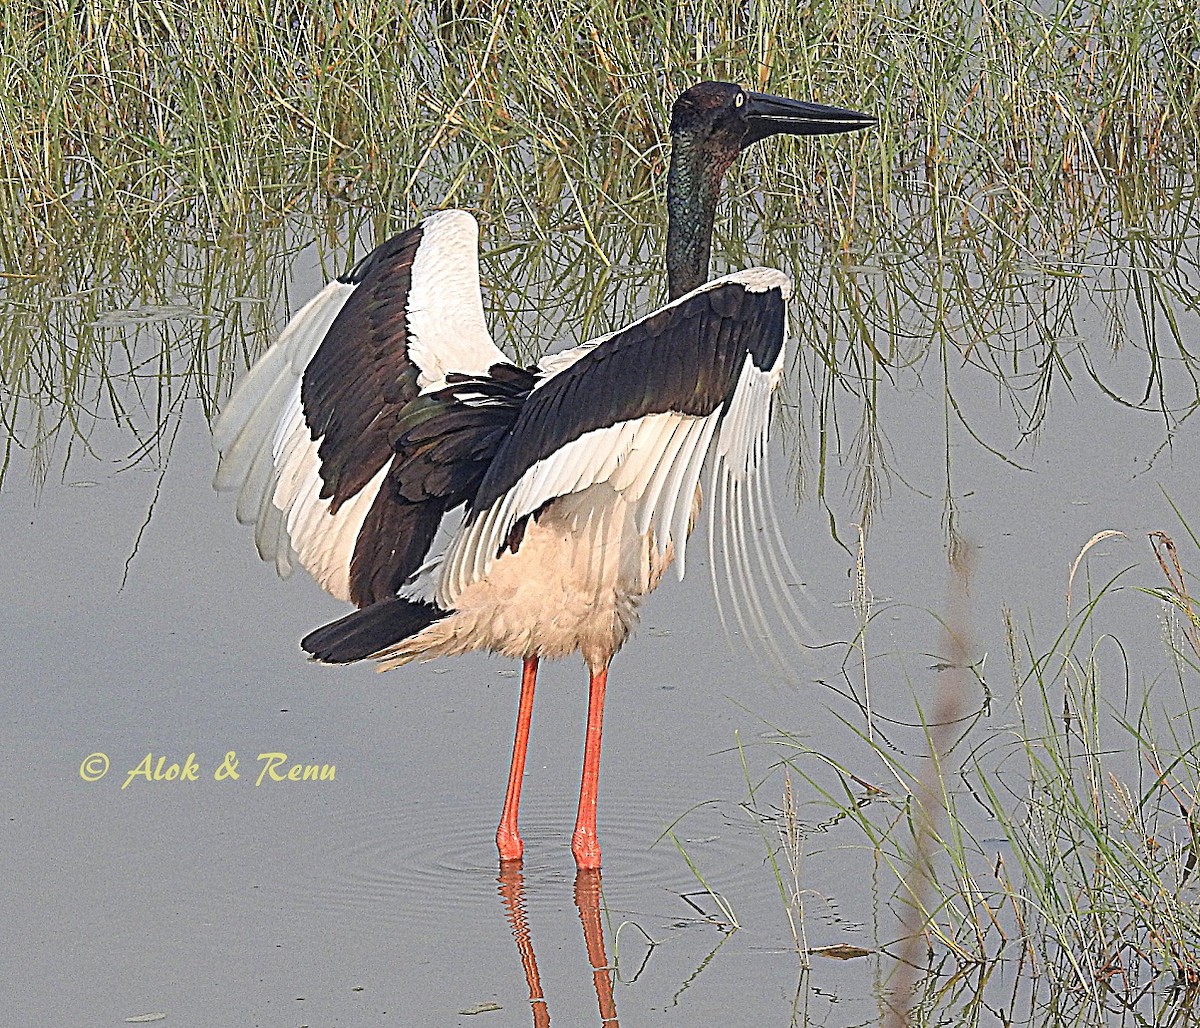 Black-necked Stork - Alok Tewari